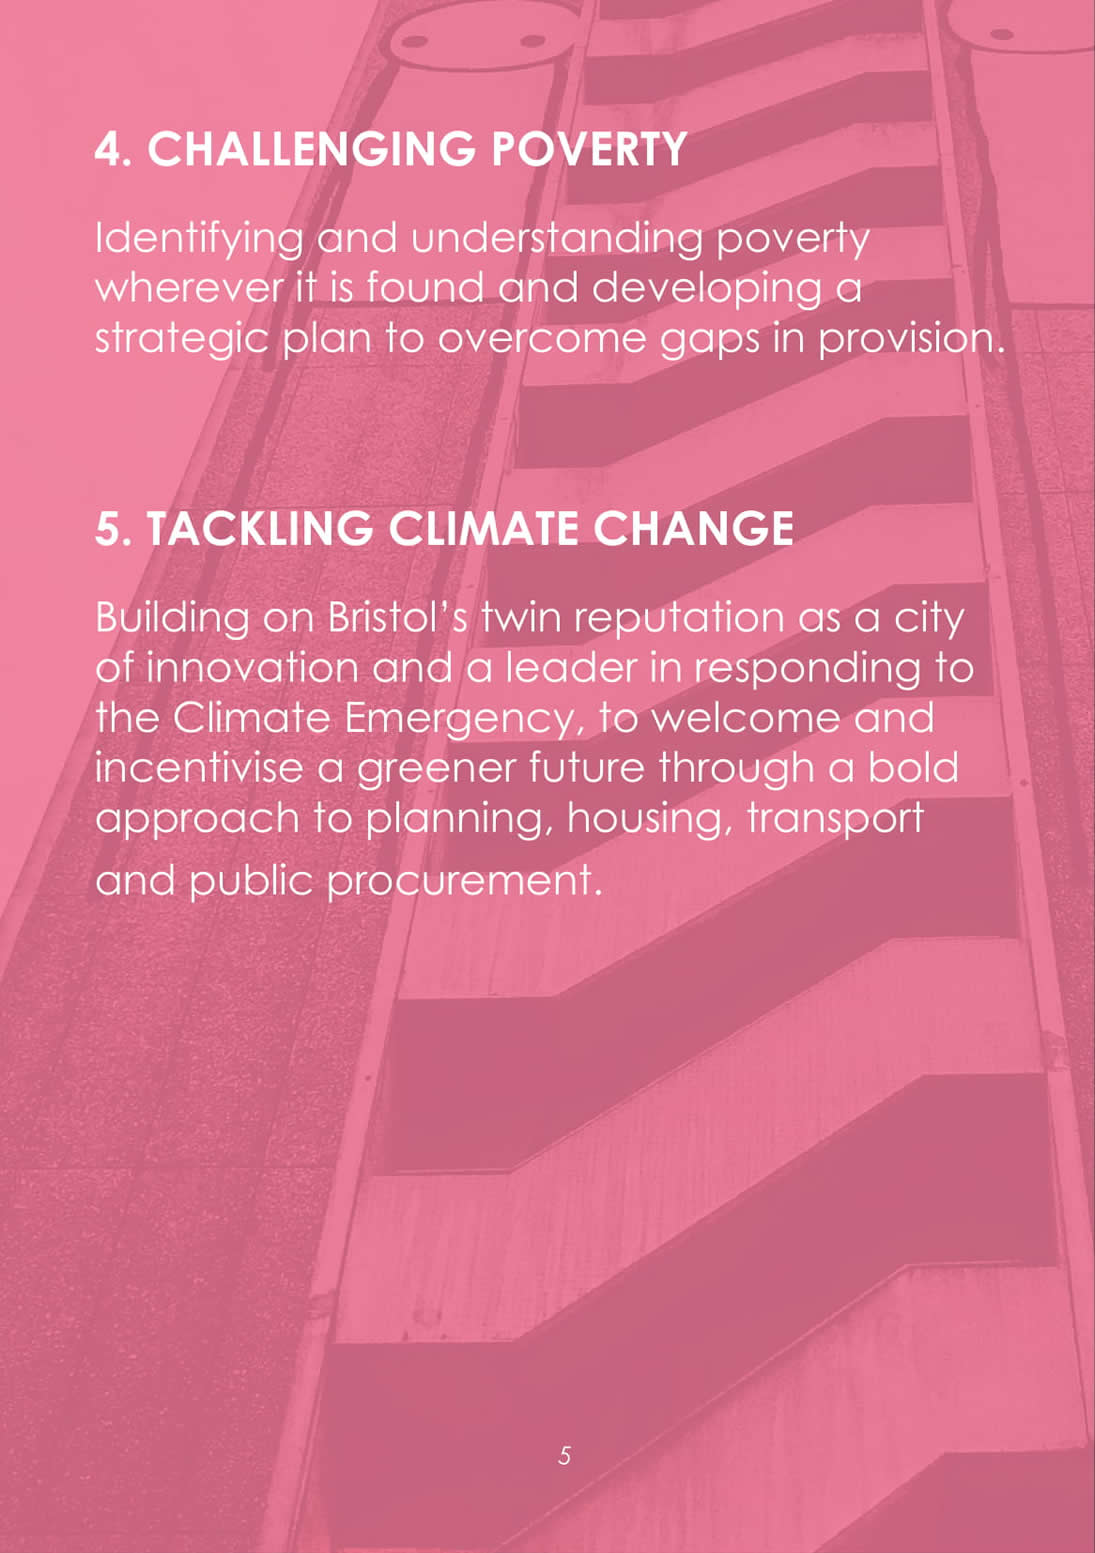 BristolFaithManifesto APR2021-